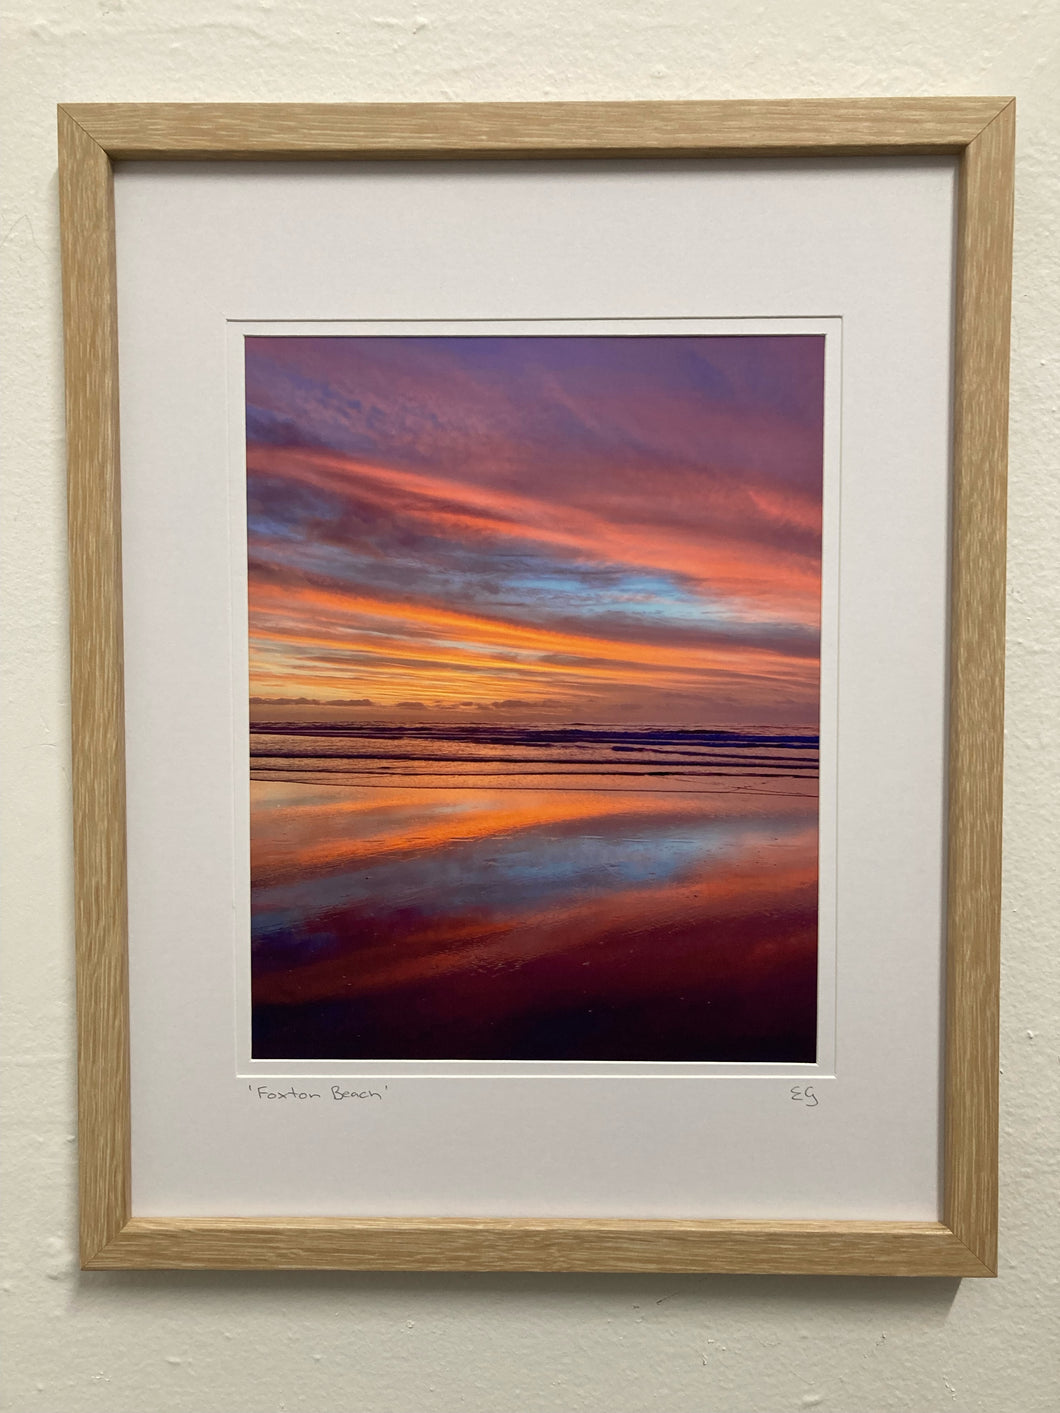 Afterglow Delight, Foxton Beach - Framed Print